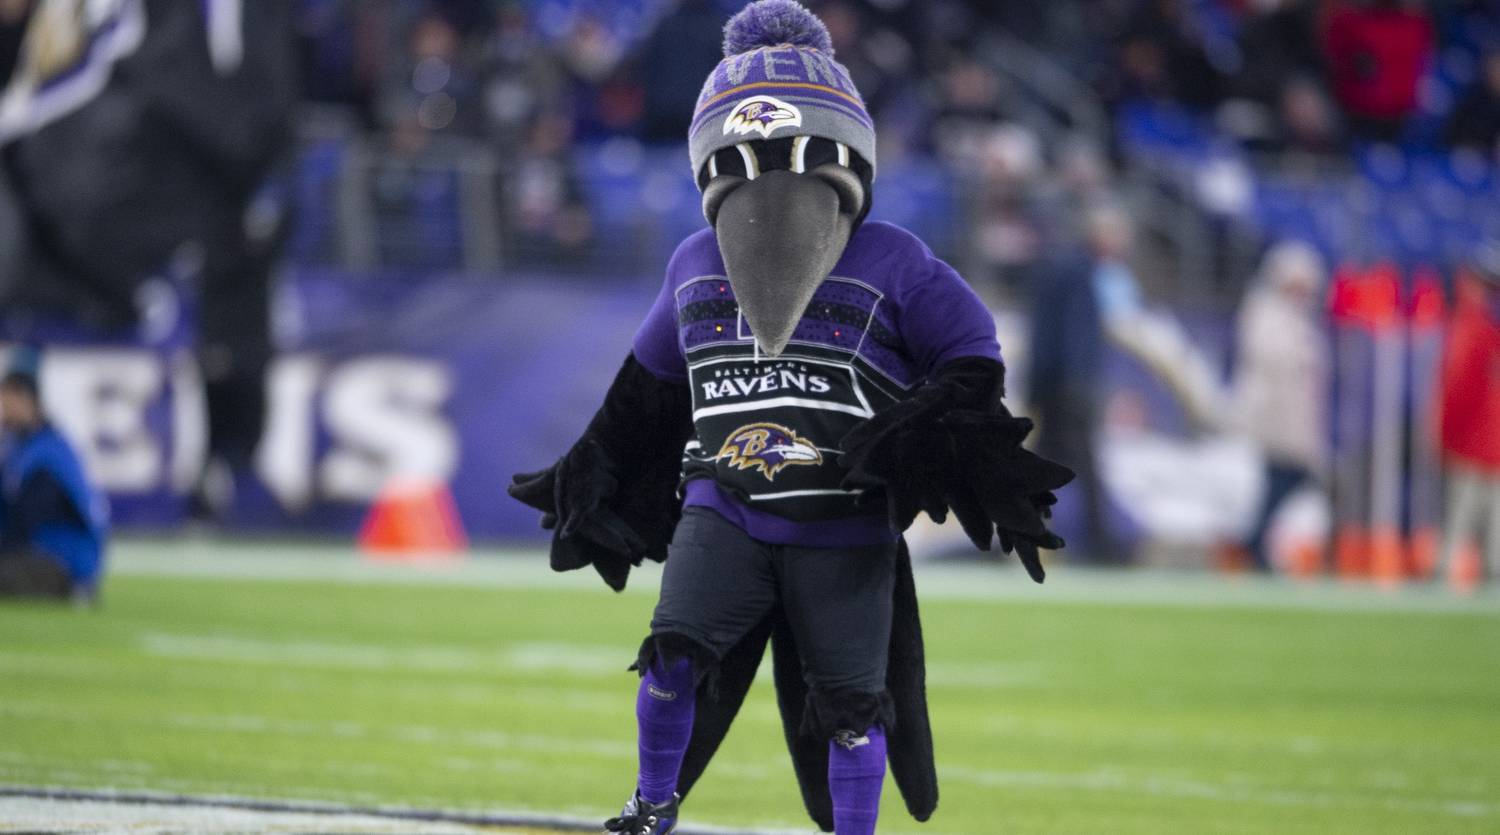 Ravens Mascot Poe Suffers Season-Ending Injury - Sports Illustrated